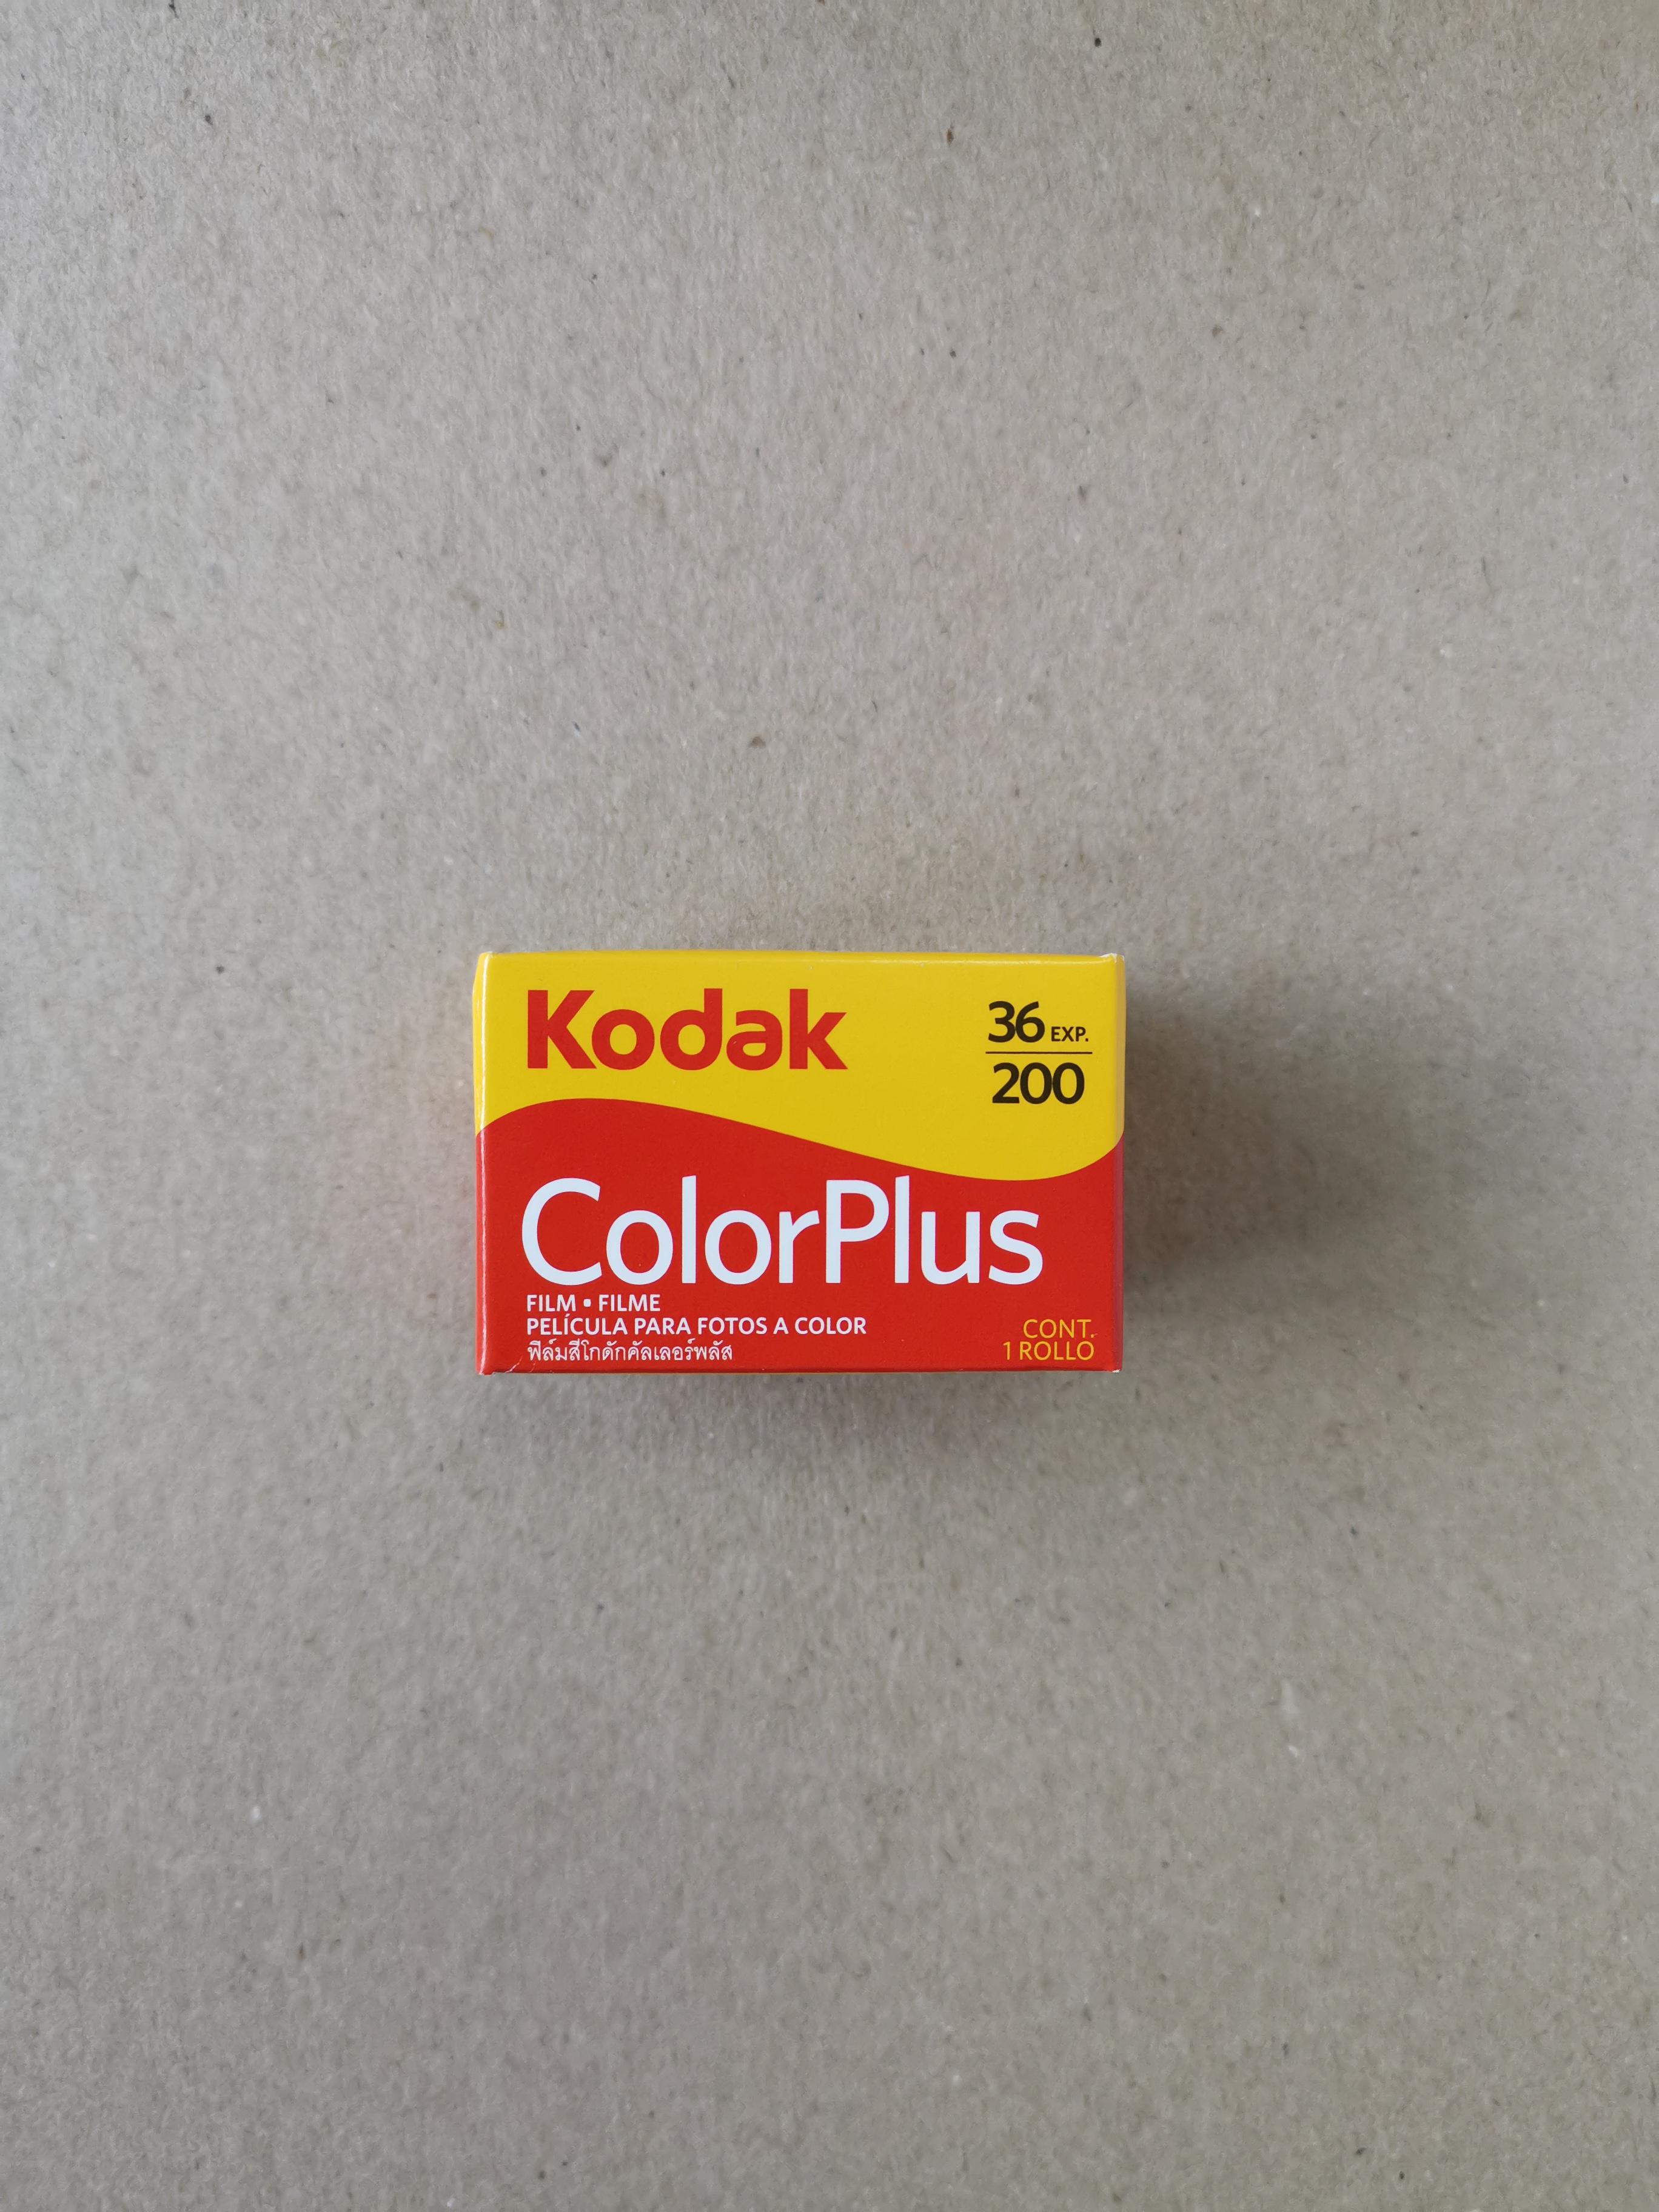 Kodak Colorplus 200 | Wonderfoto